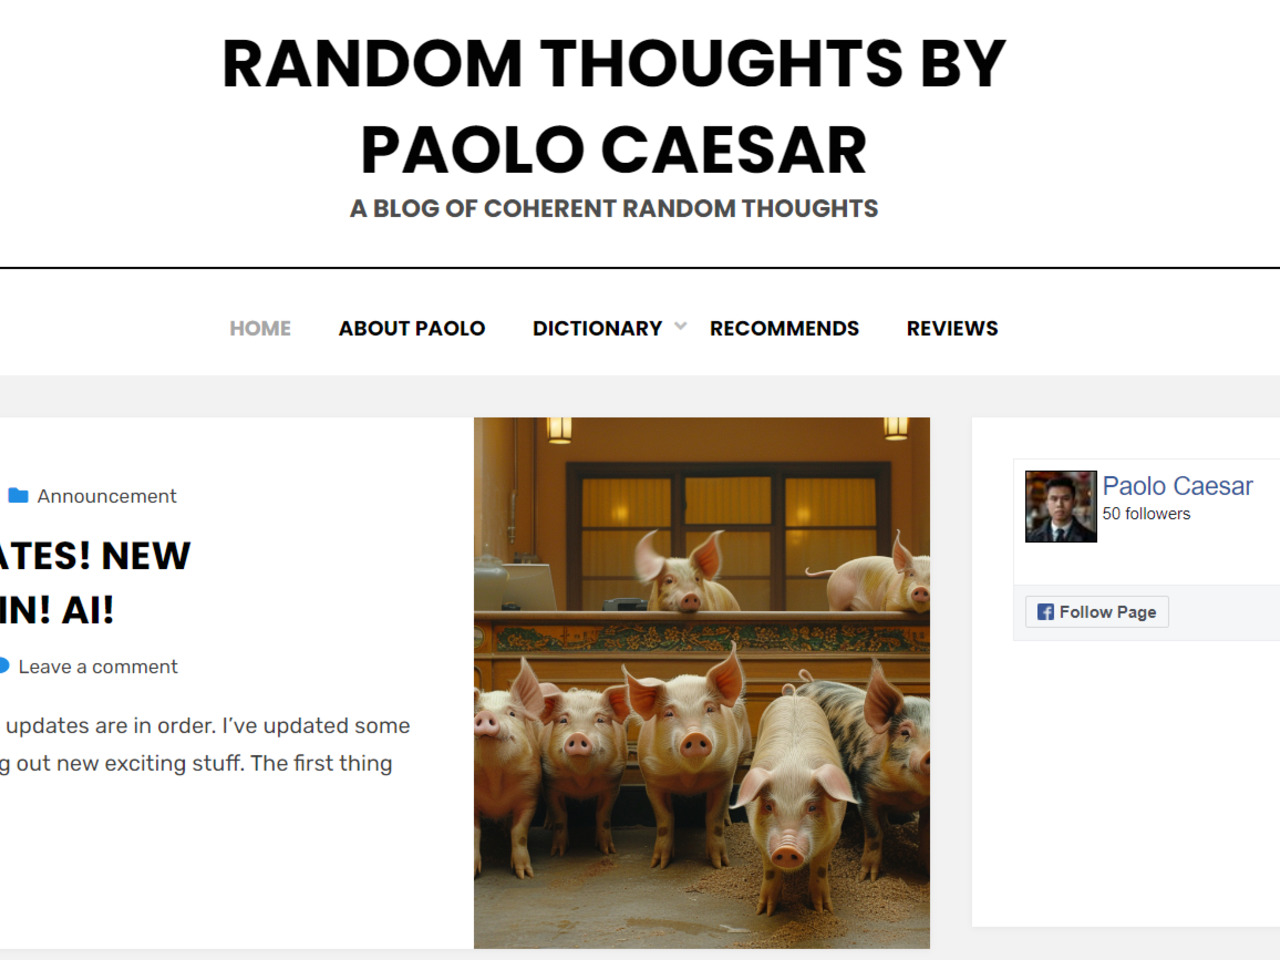 Paolo Caesar blog